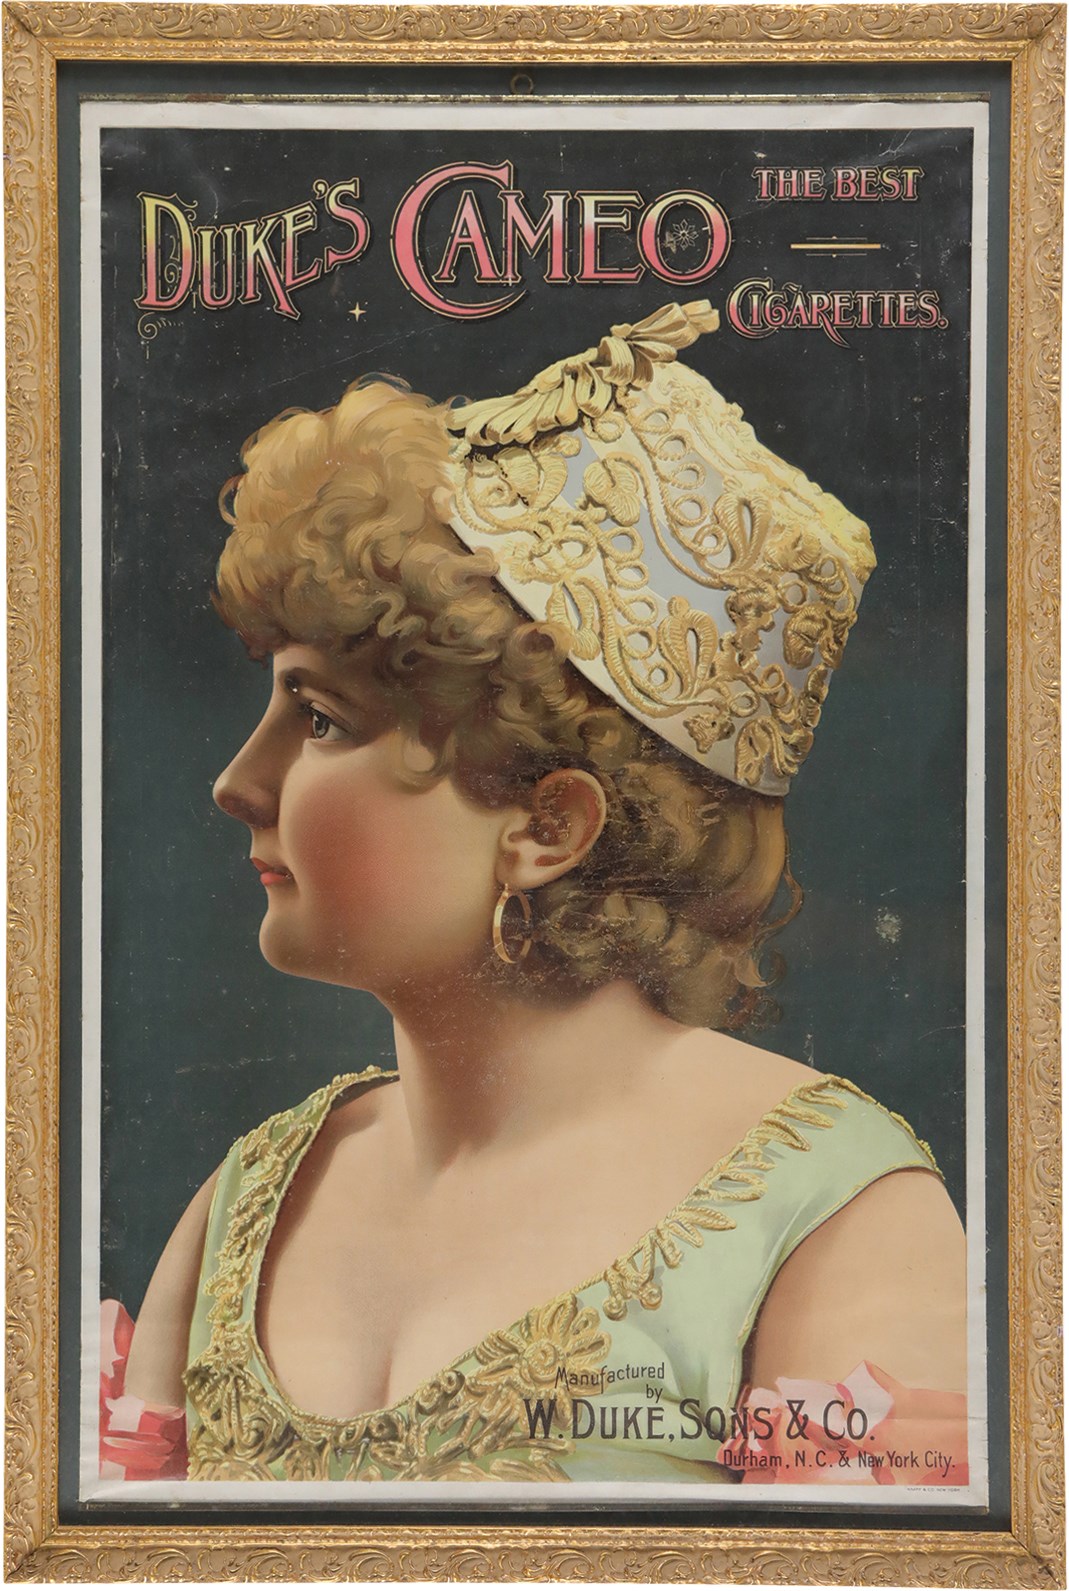 Non-Sports Cards - Circa 1880s Duke Cameo Cigarettes Advertising Poster